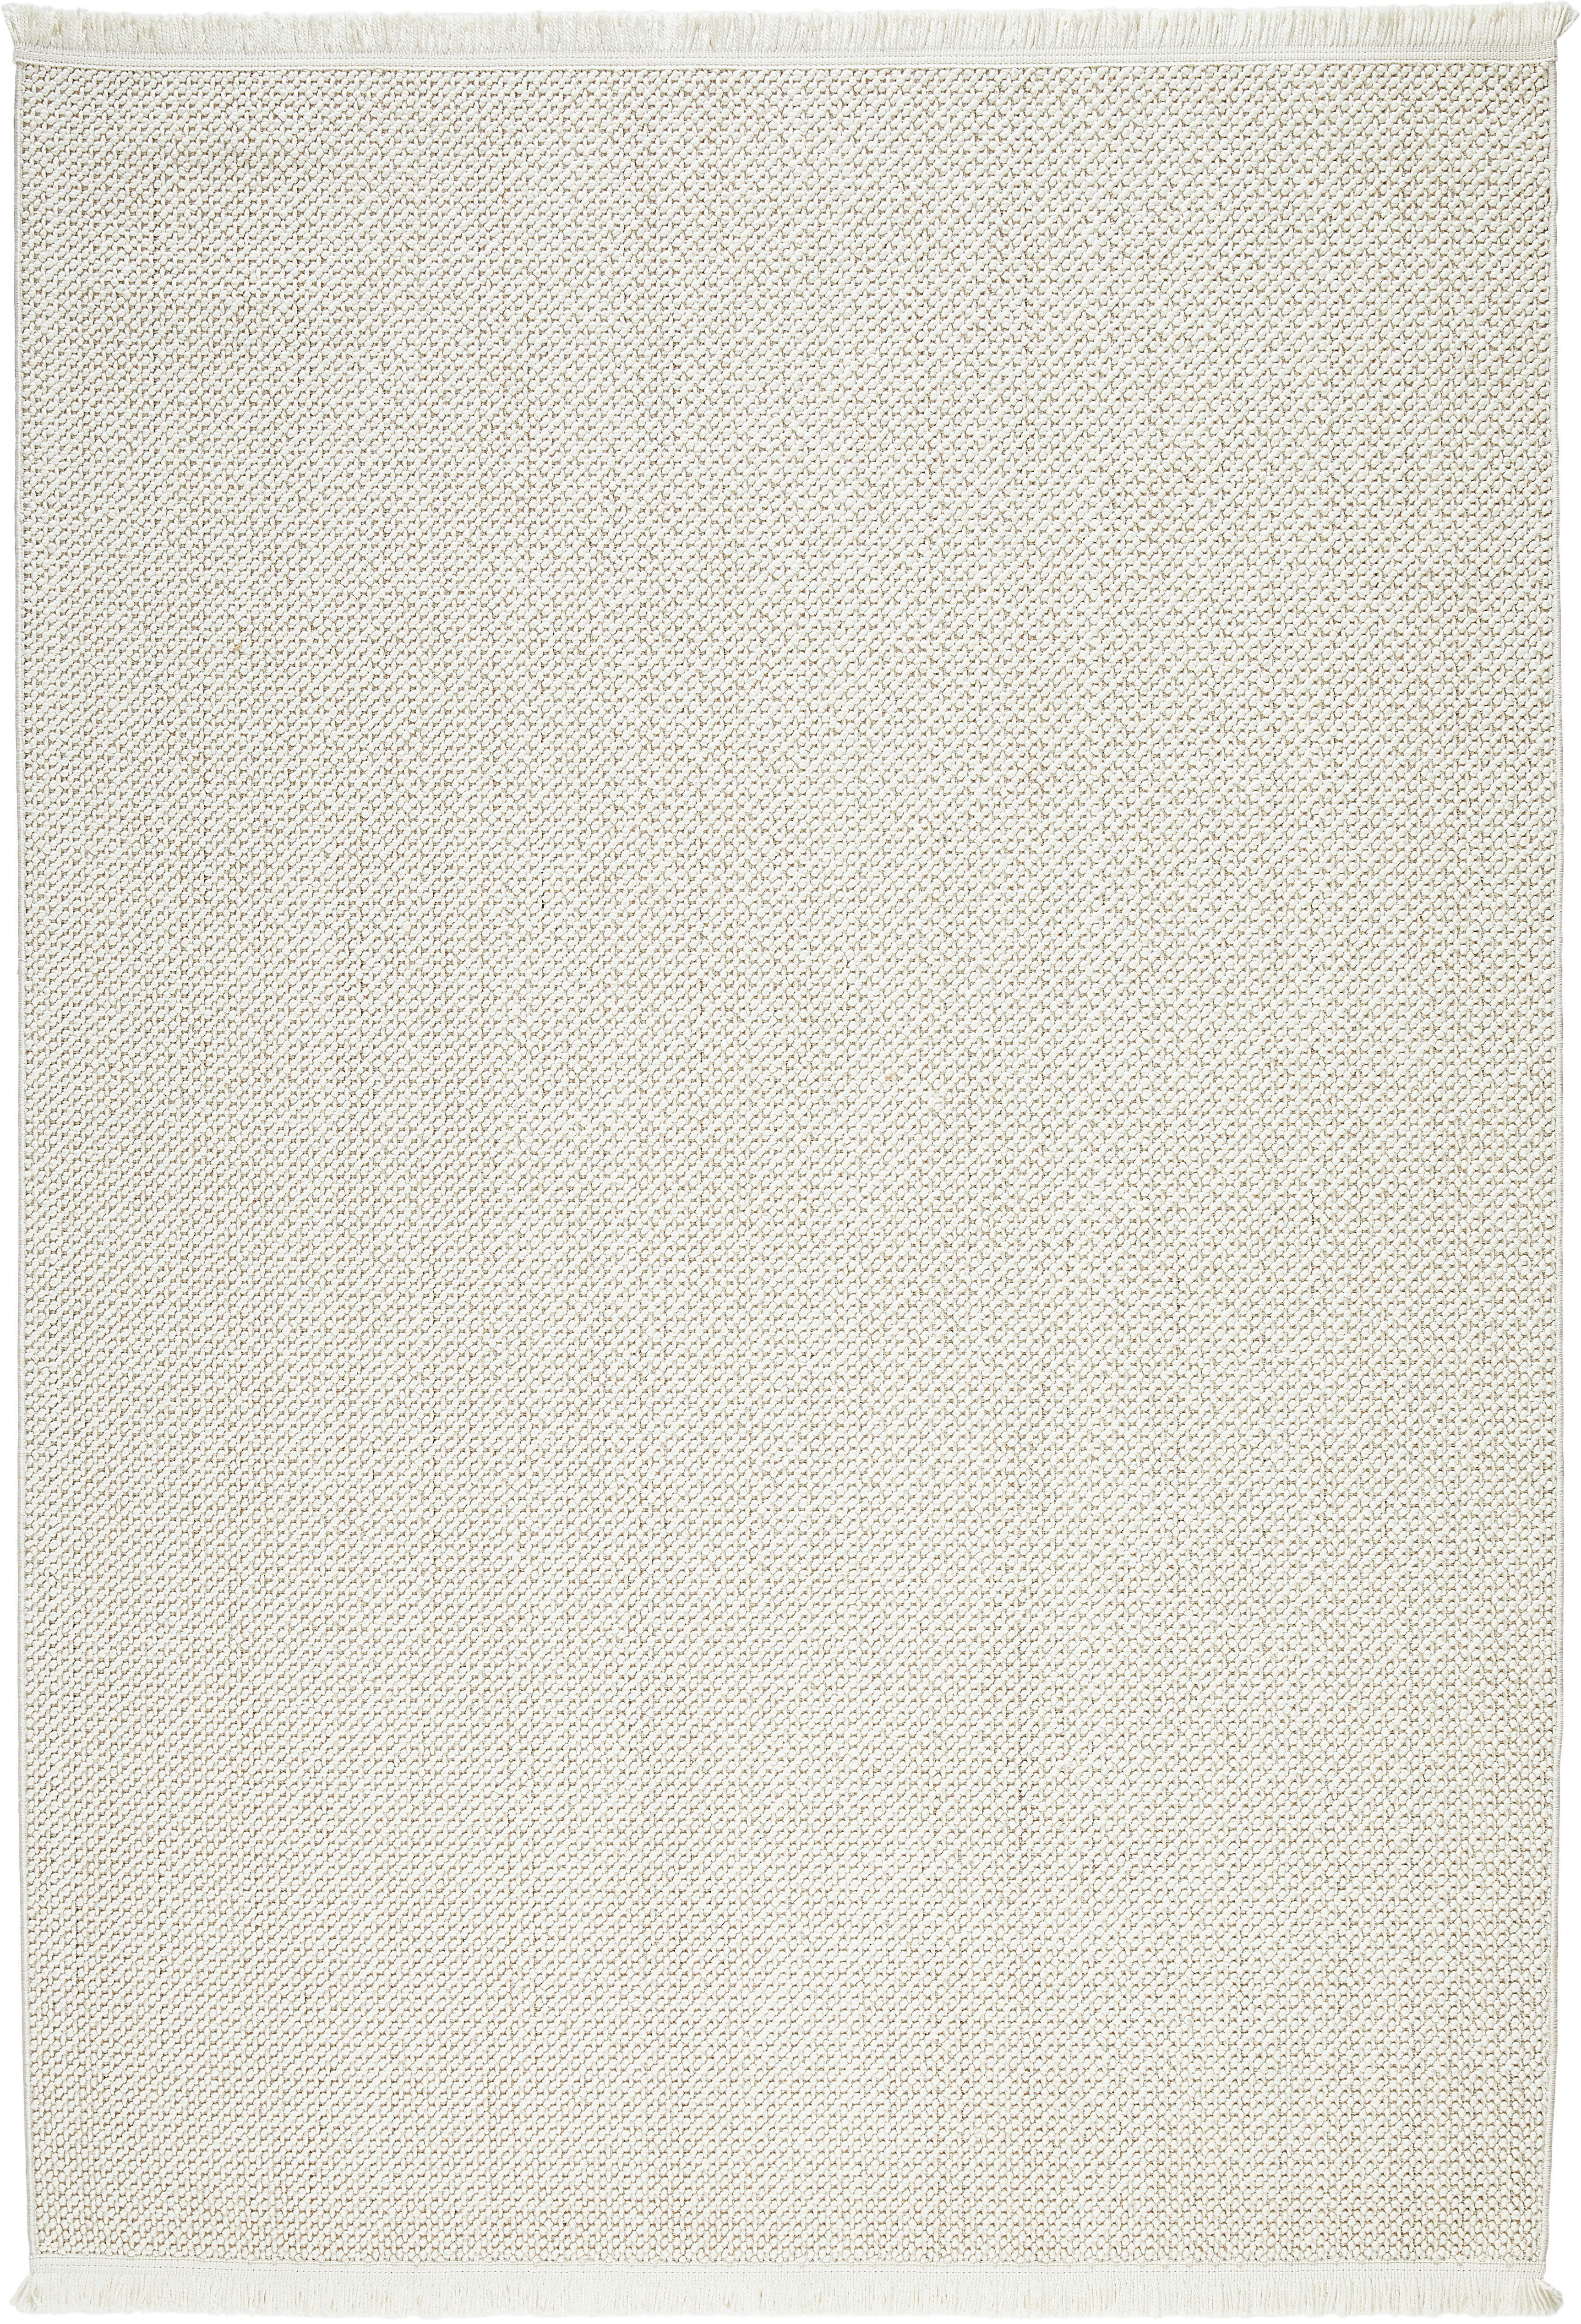 WEBTEPPICH 200/290 cm  - Weiß, Basics, Textil (200/290cm) - Novel